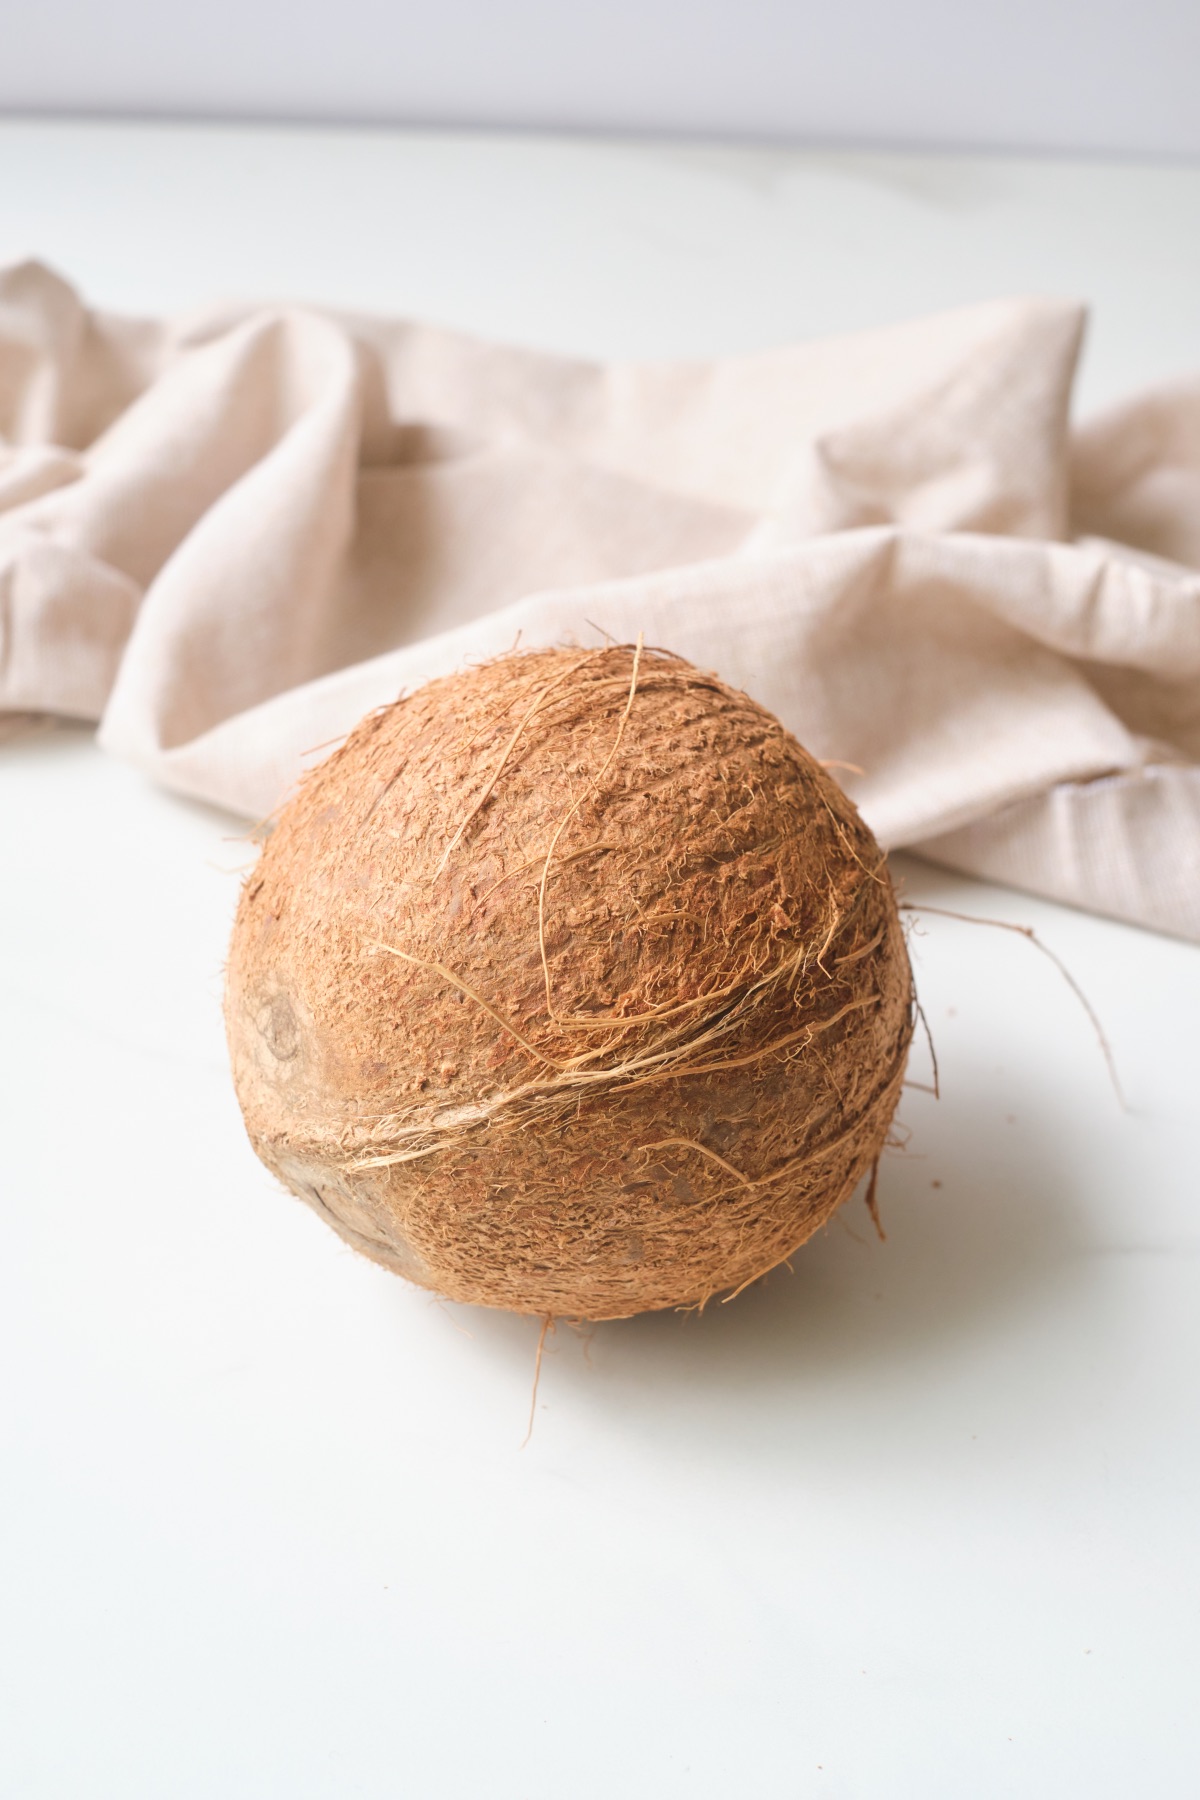 coconut ingredients to make fresh coconut milk